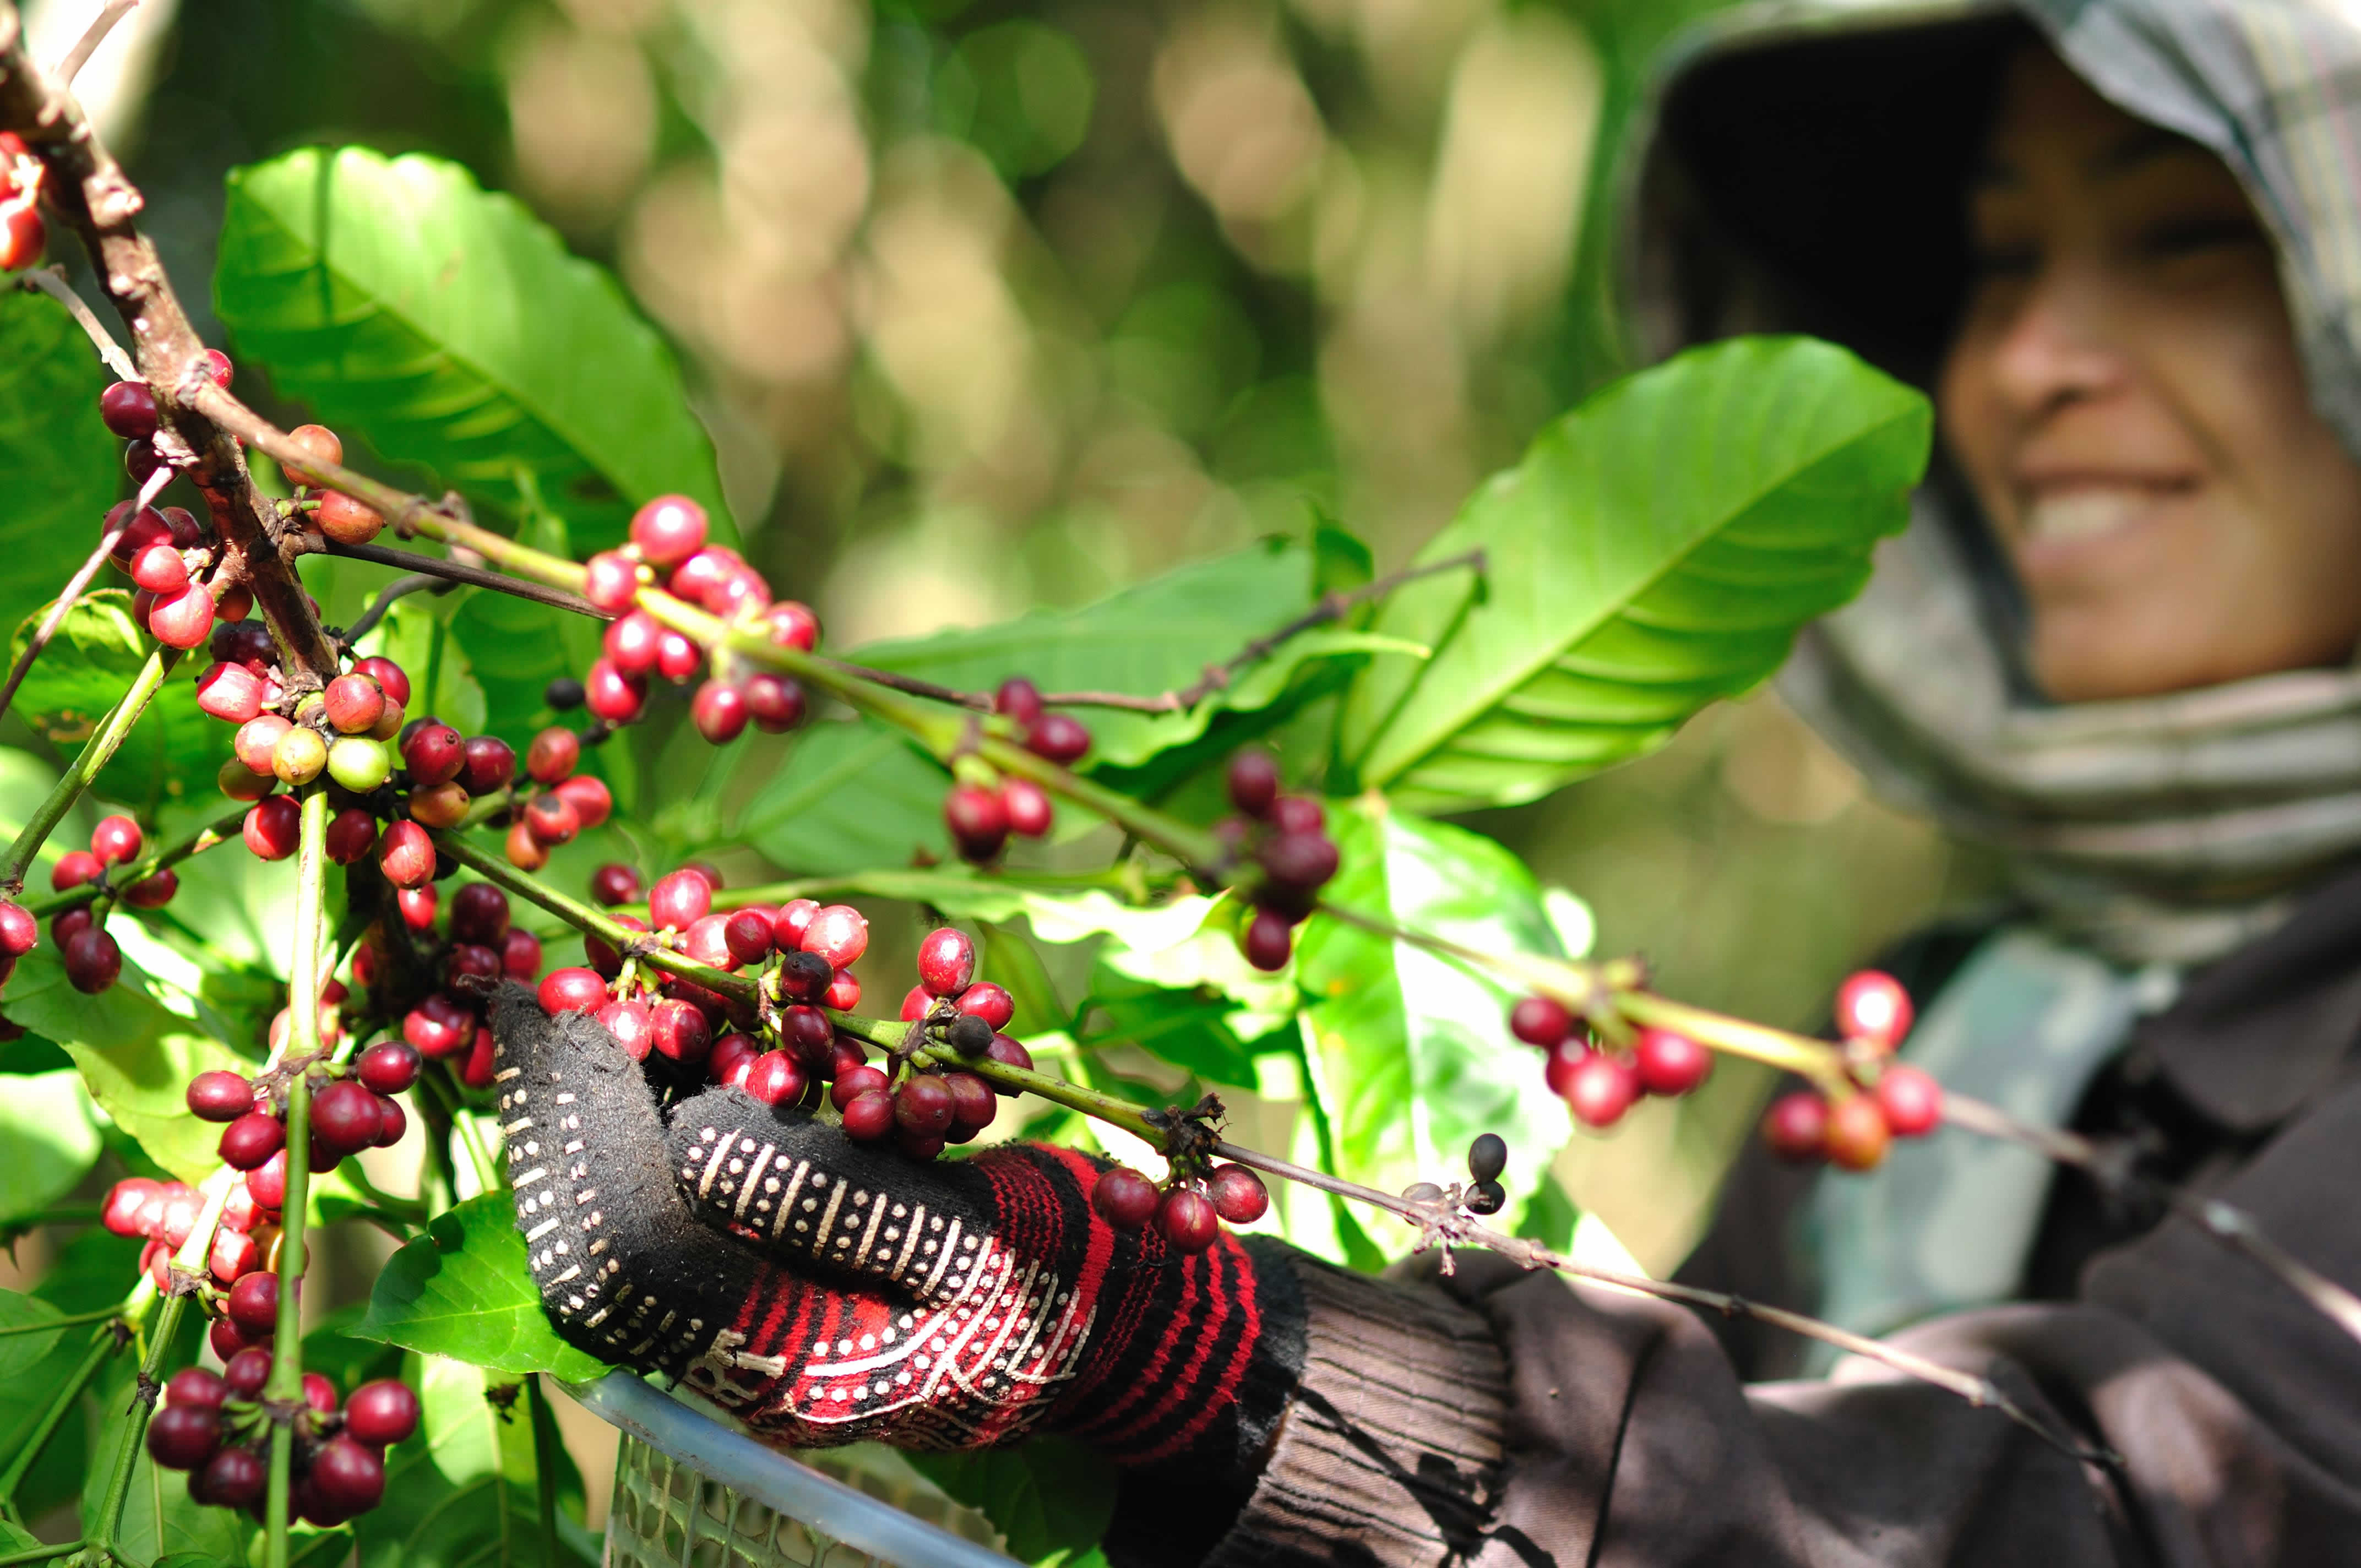 Coffee farmer in Vietnam ©ICCO/GREENcoffee project